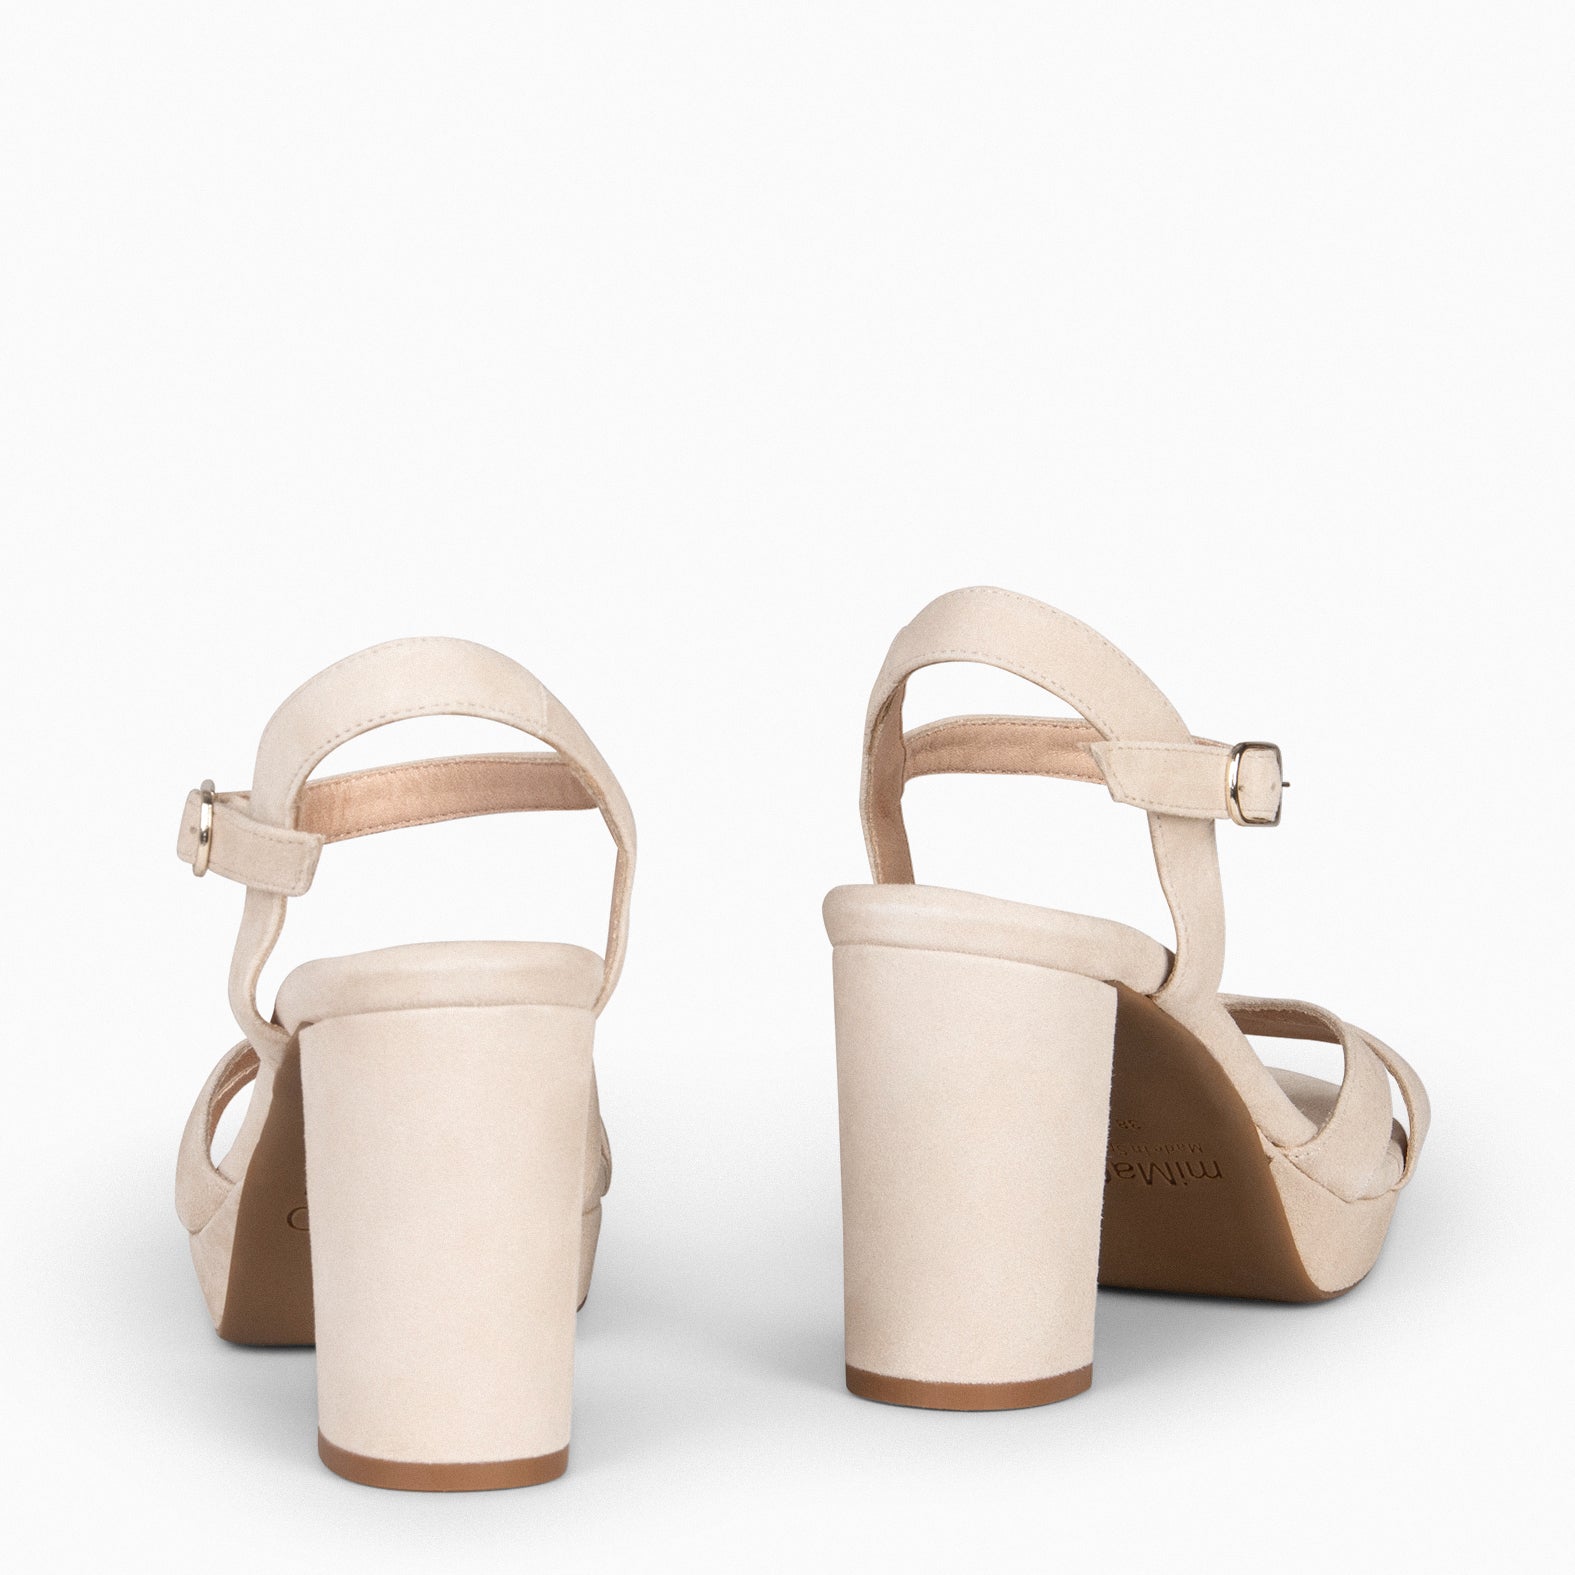 PARIS – BEIGE high heel sandal with platform